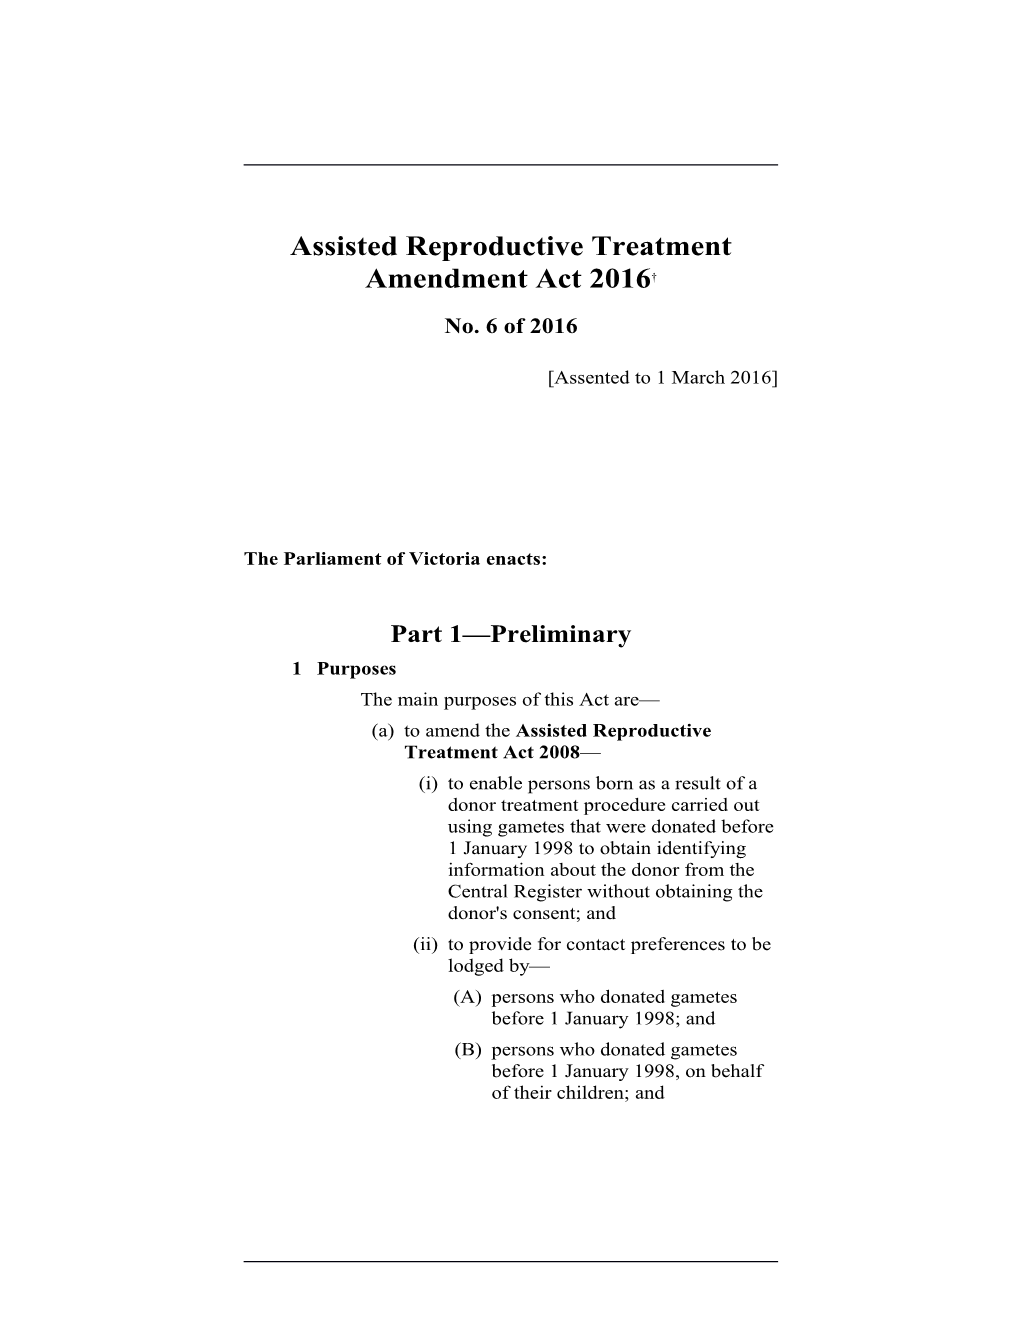 Assisted Reproductive Treatment Amendment Act 2016